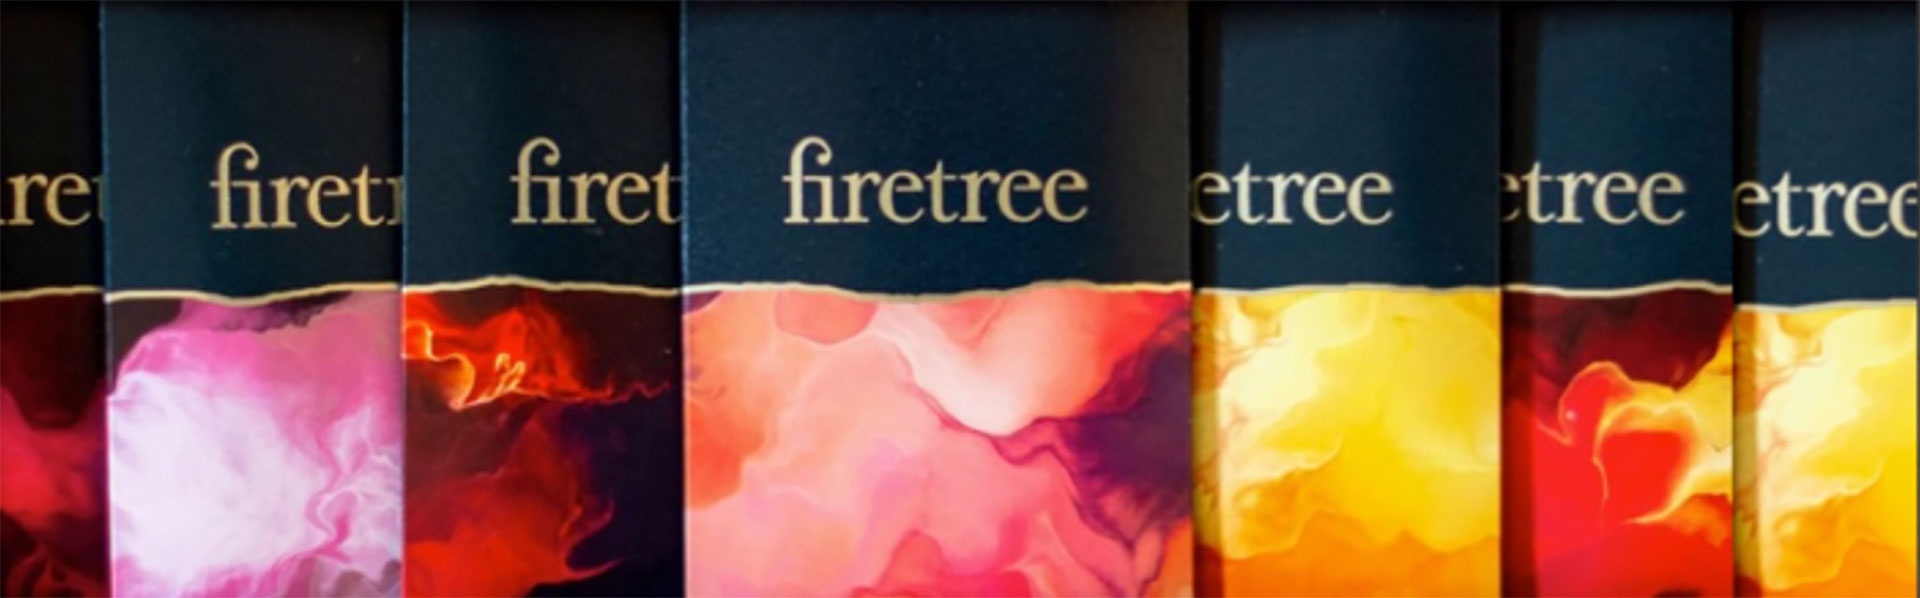 Firetree Chocolate